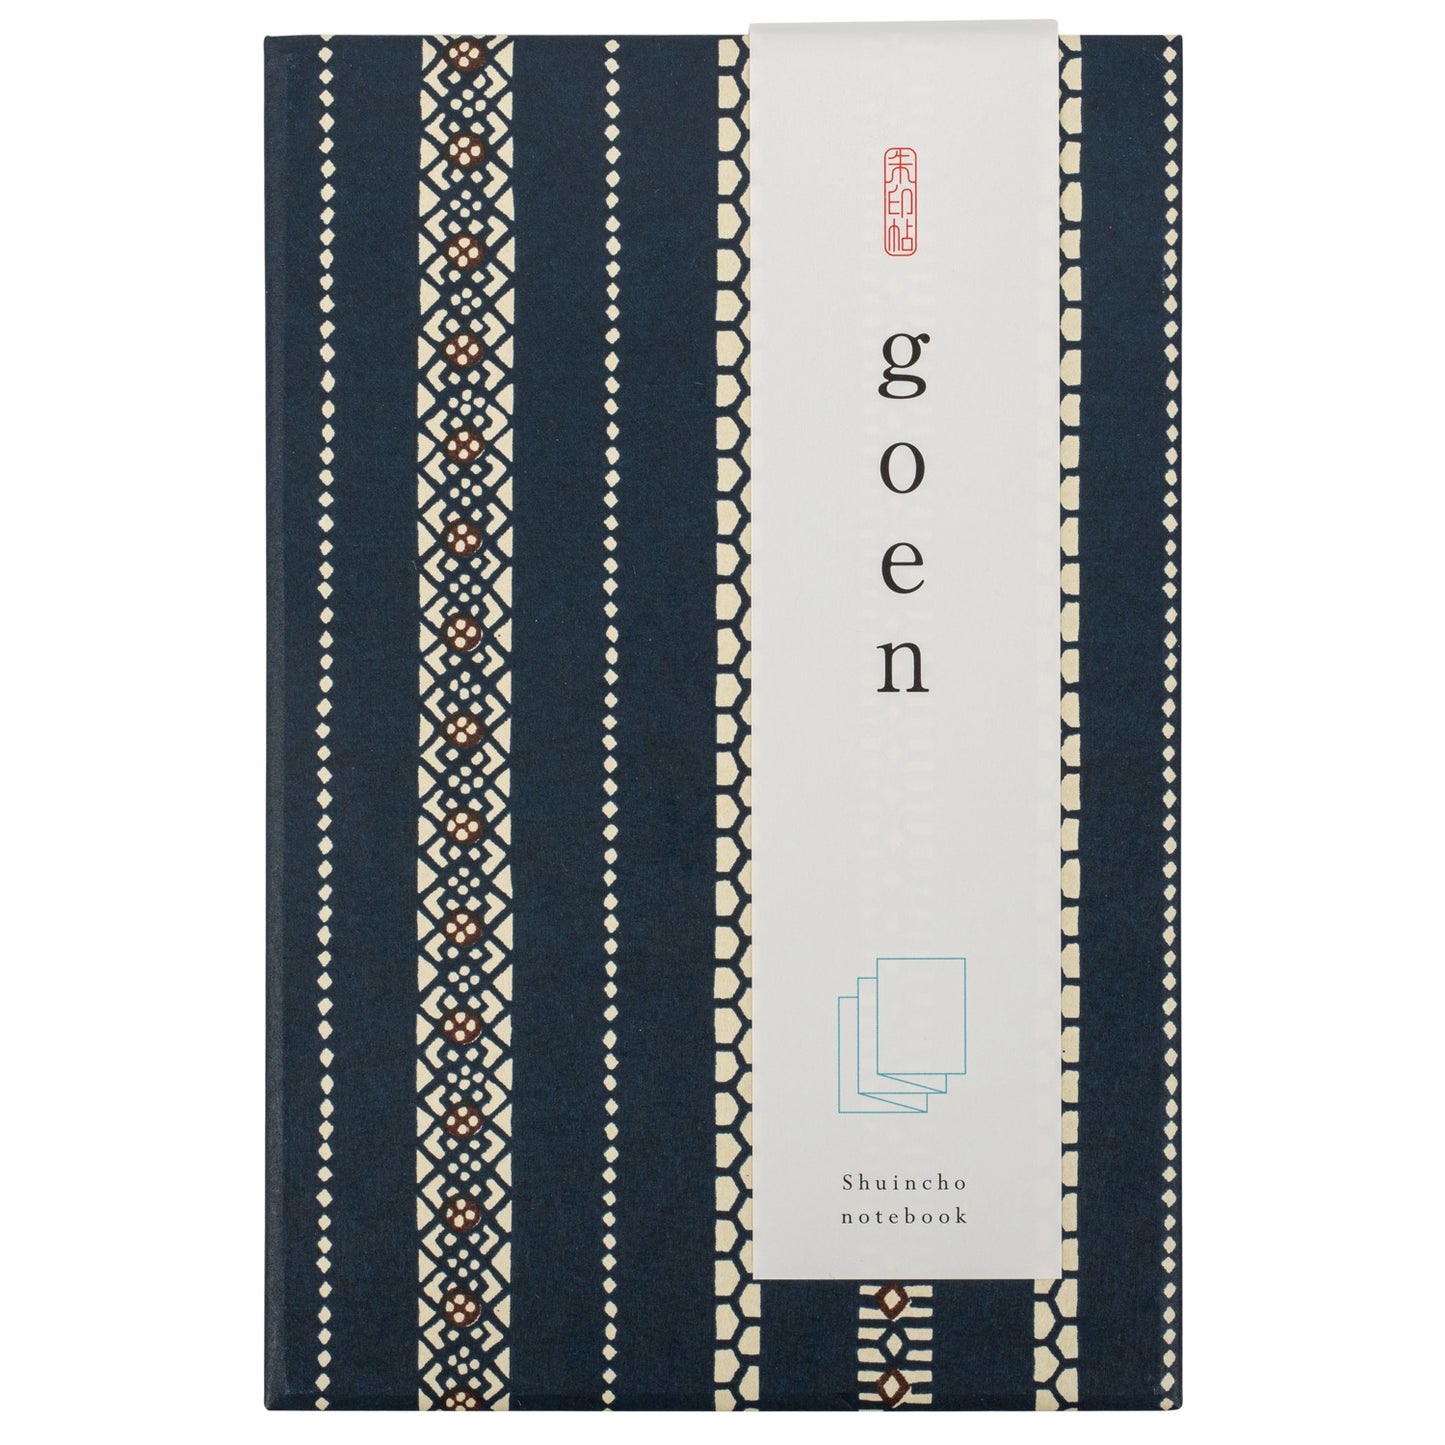 Zenkoji Japanese Goshuincho Notebook and label